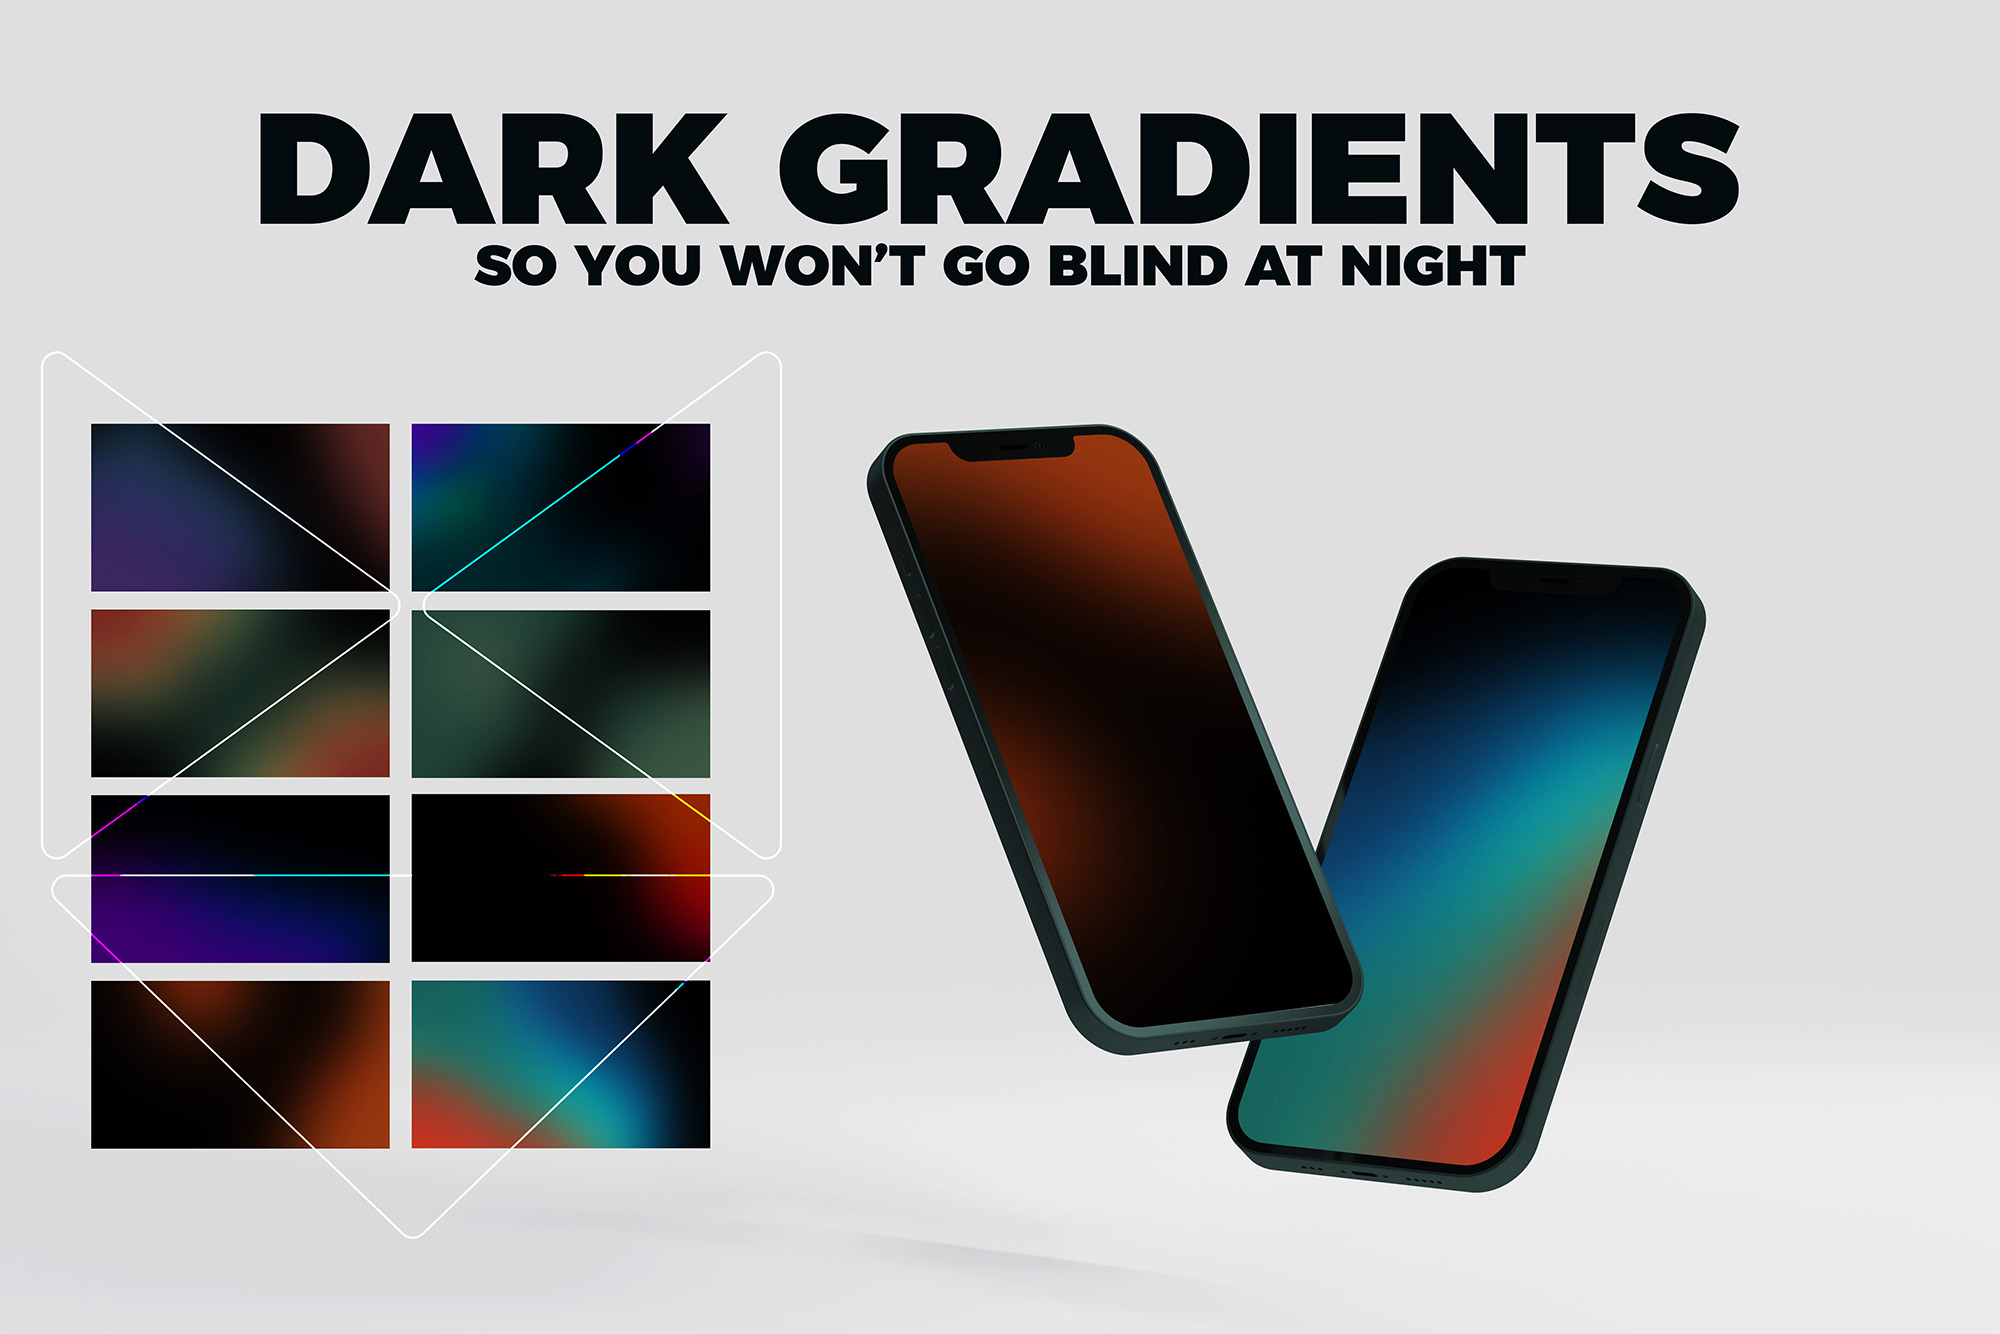 Dark Gradients wallpaper pack